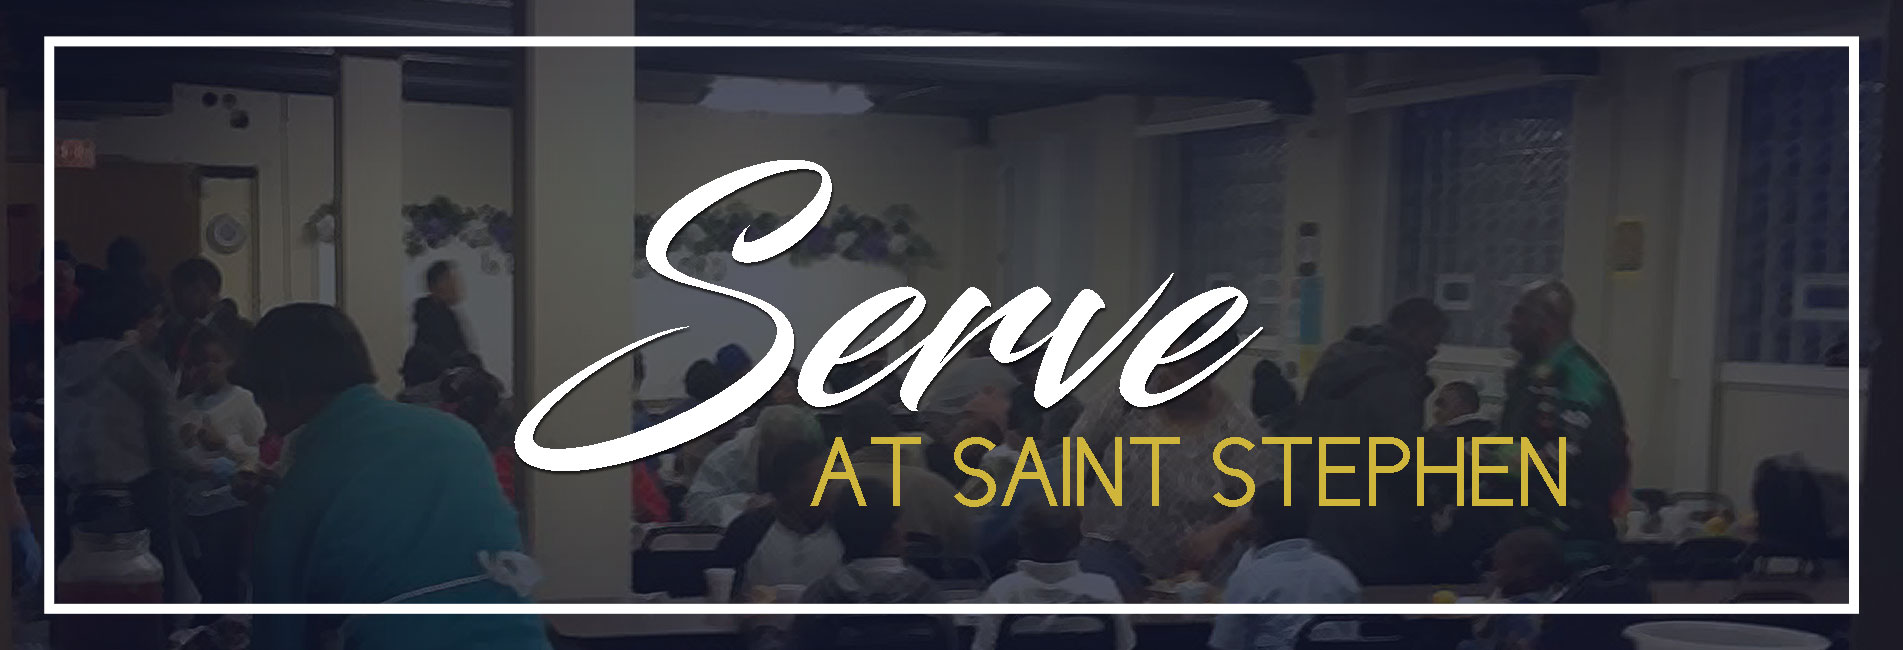 Serve at Saint Stephen